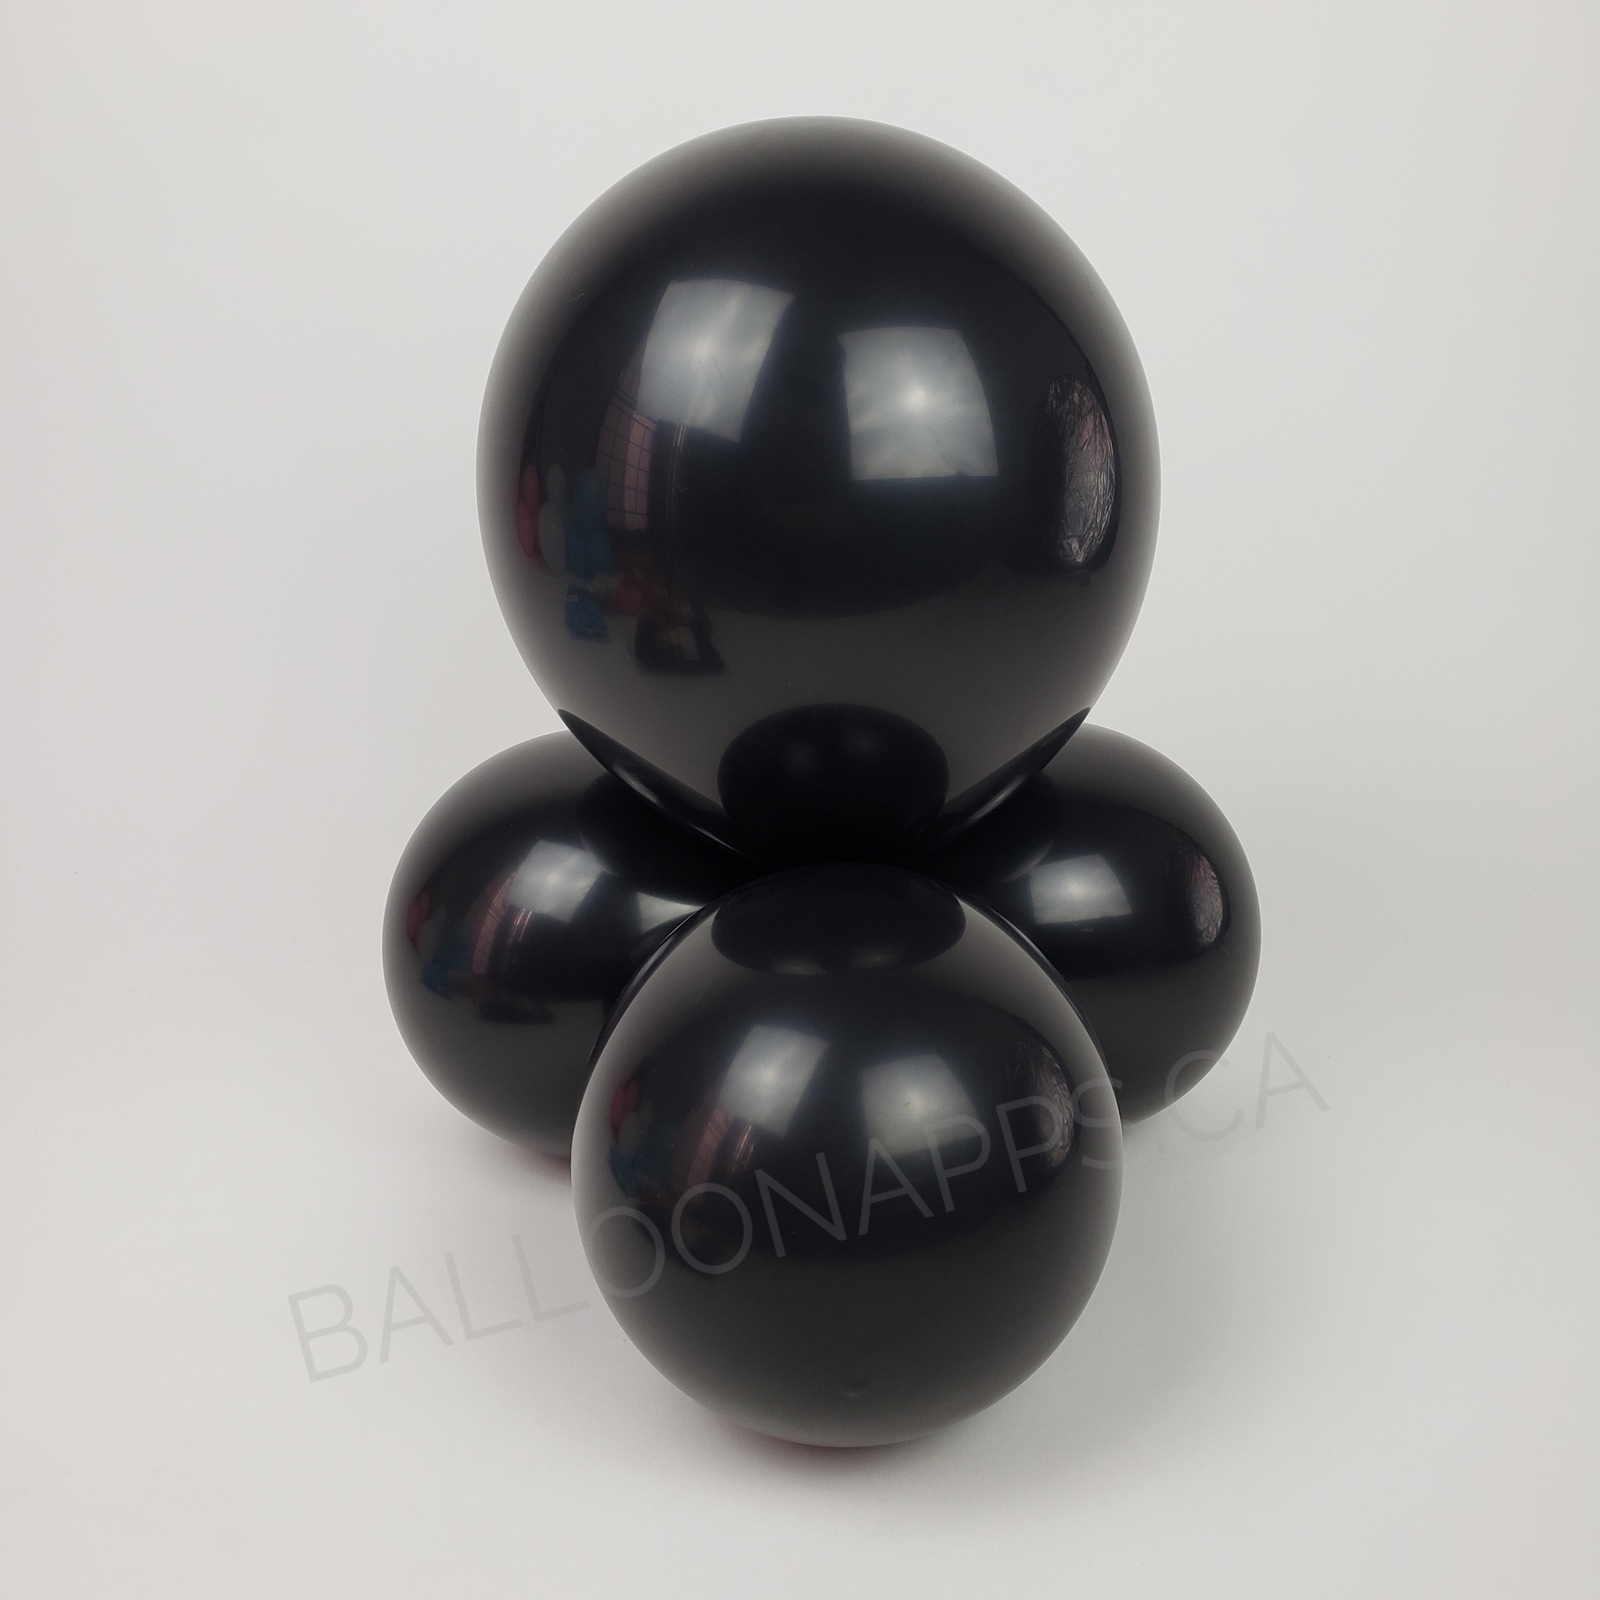 balloon texture NOVA (15) 18